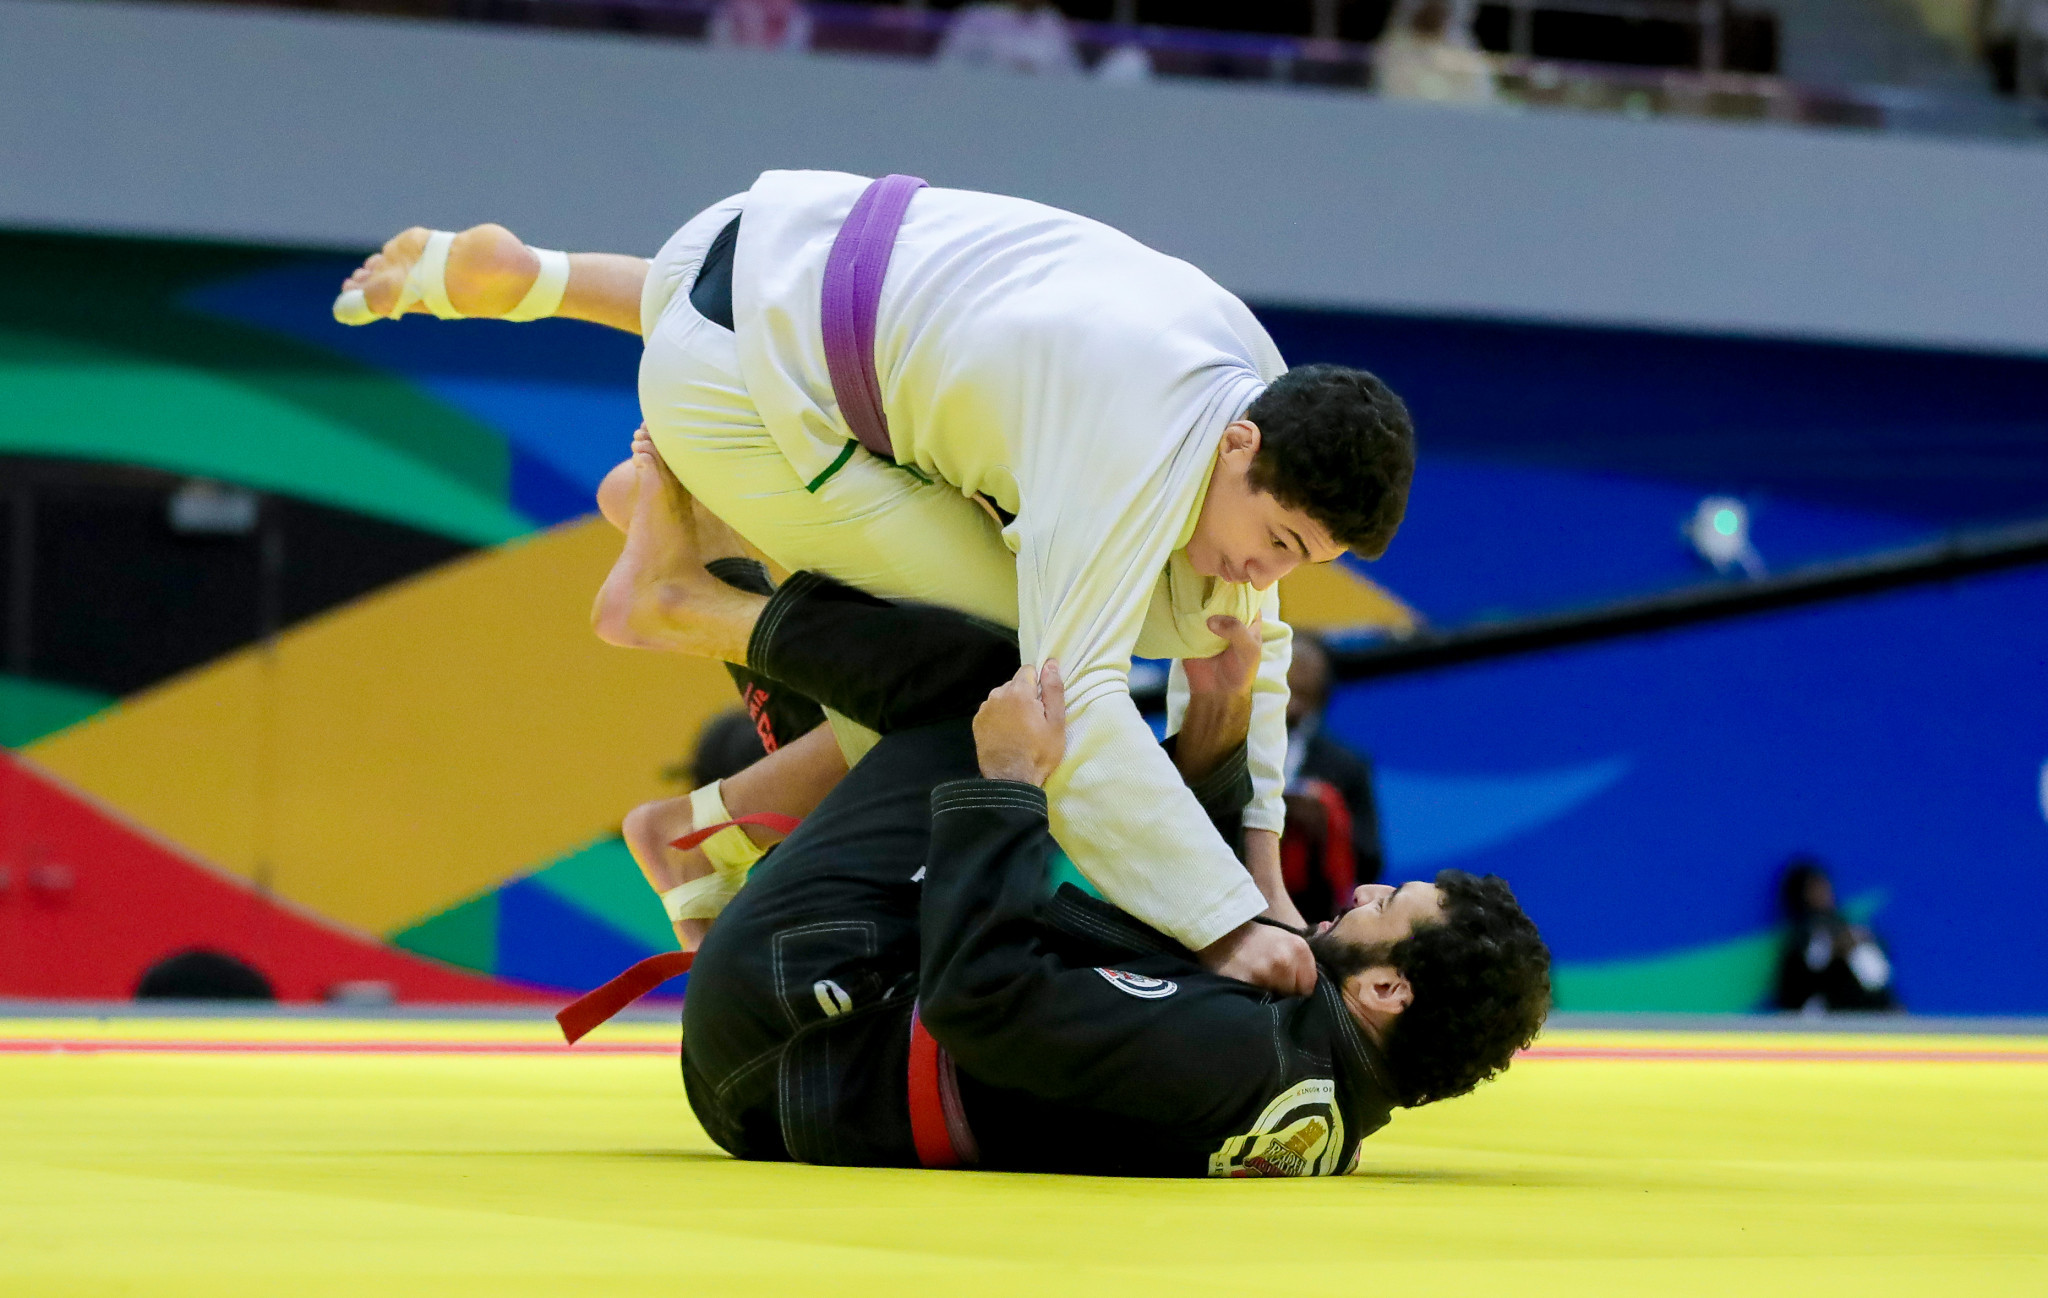 The Ju-Jitsu champions were awarded in Saudi Games 2023 ©  Saudi Games